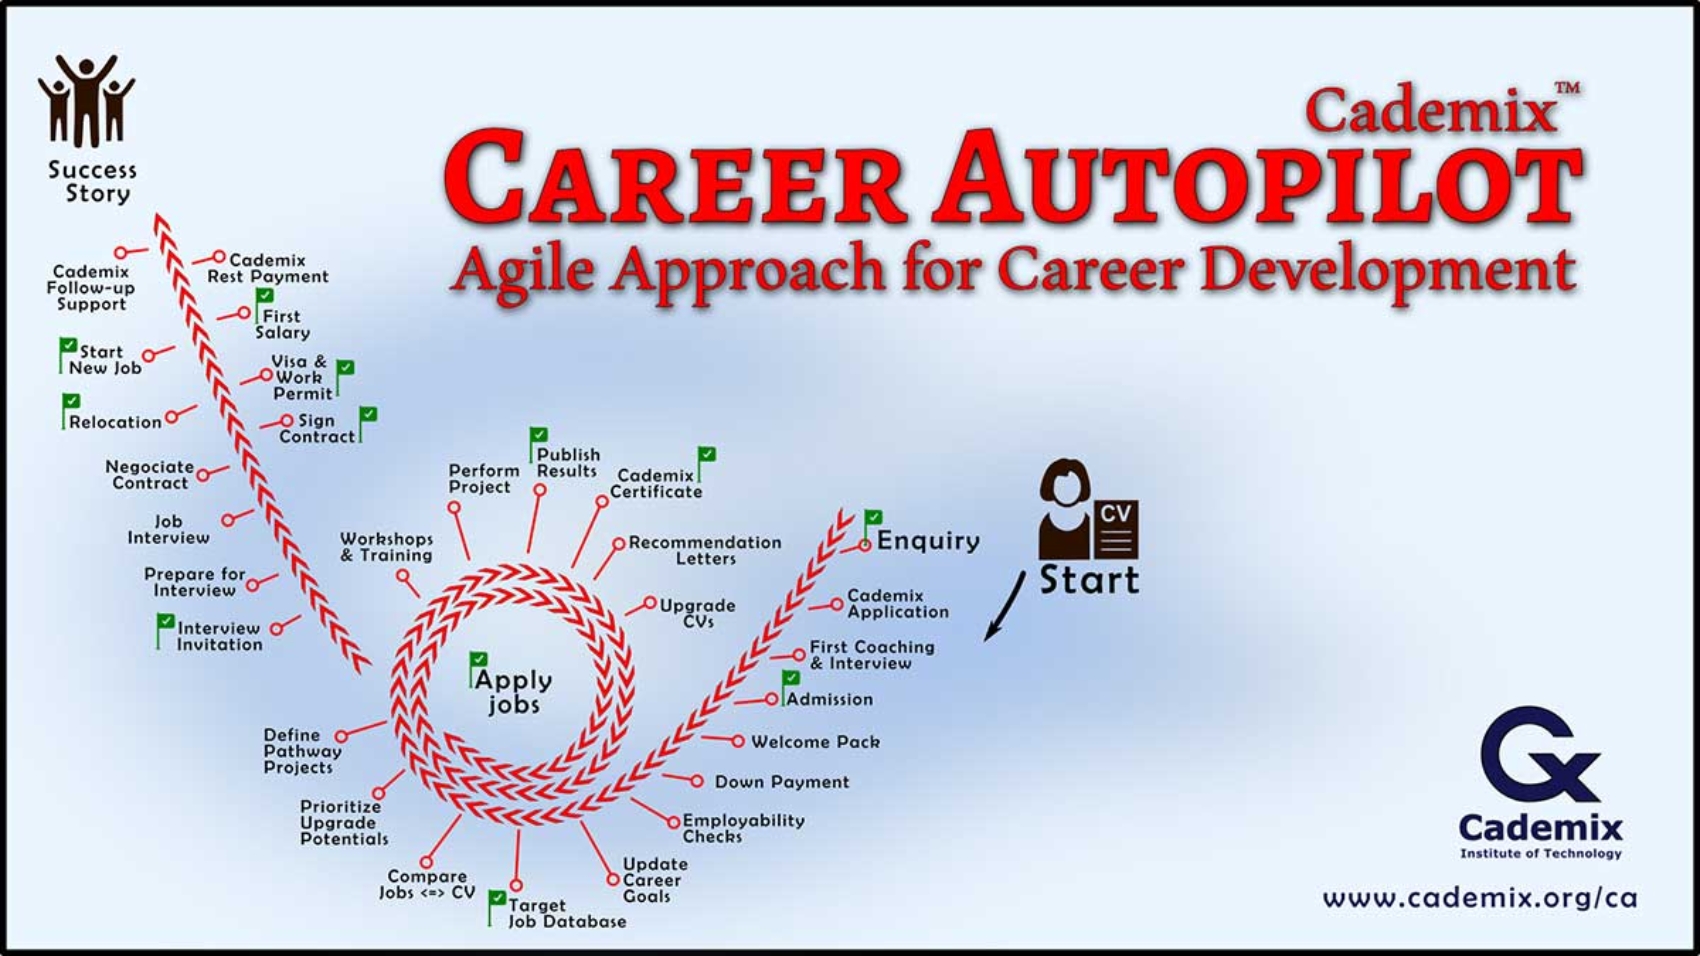 Cademix Career Autopilot Agile Career Development Pathway for Job seekers in Europe FHD